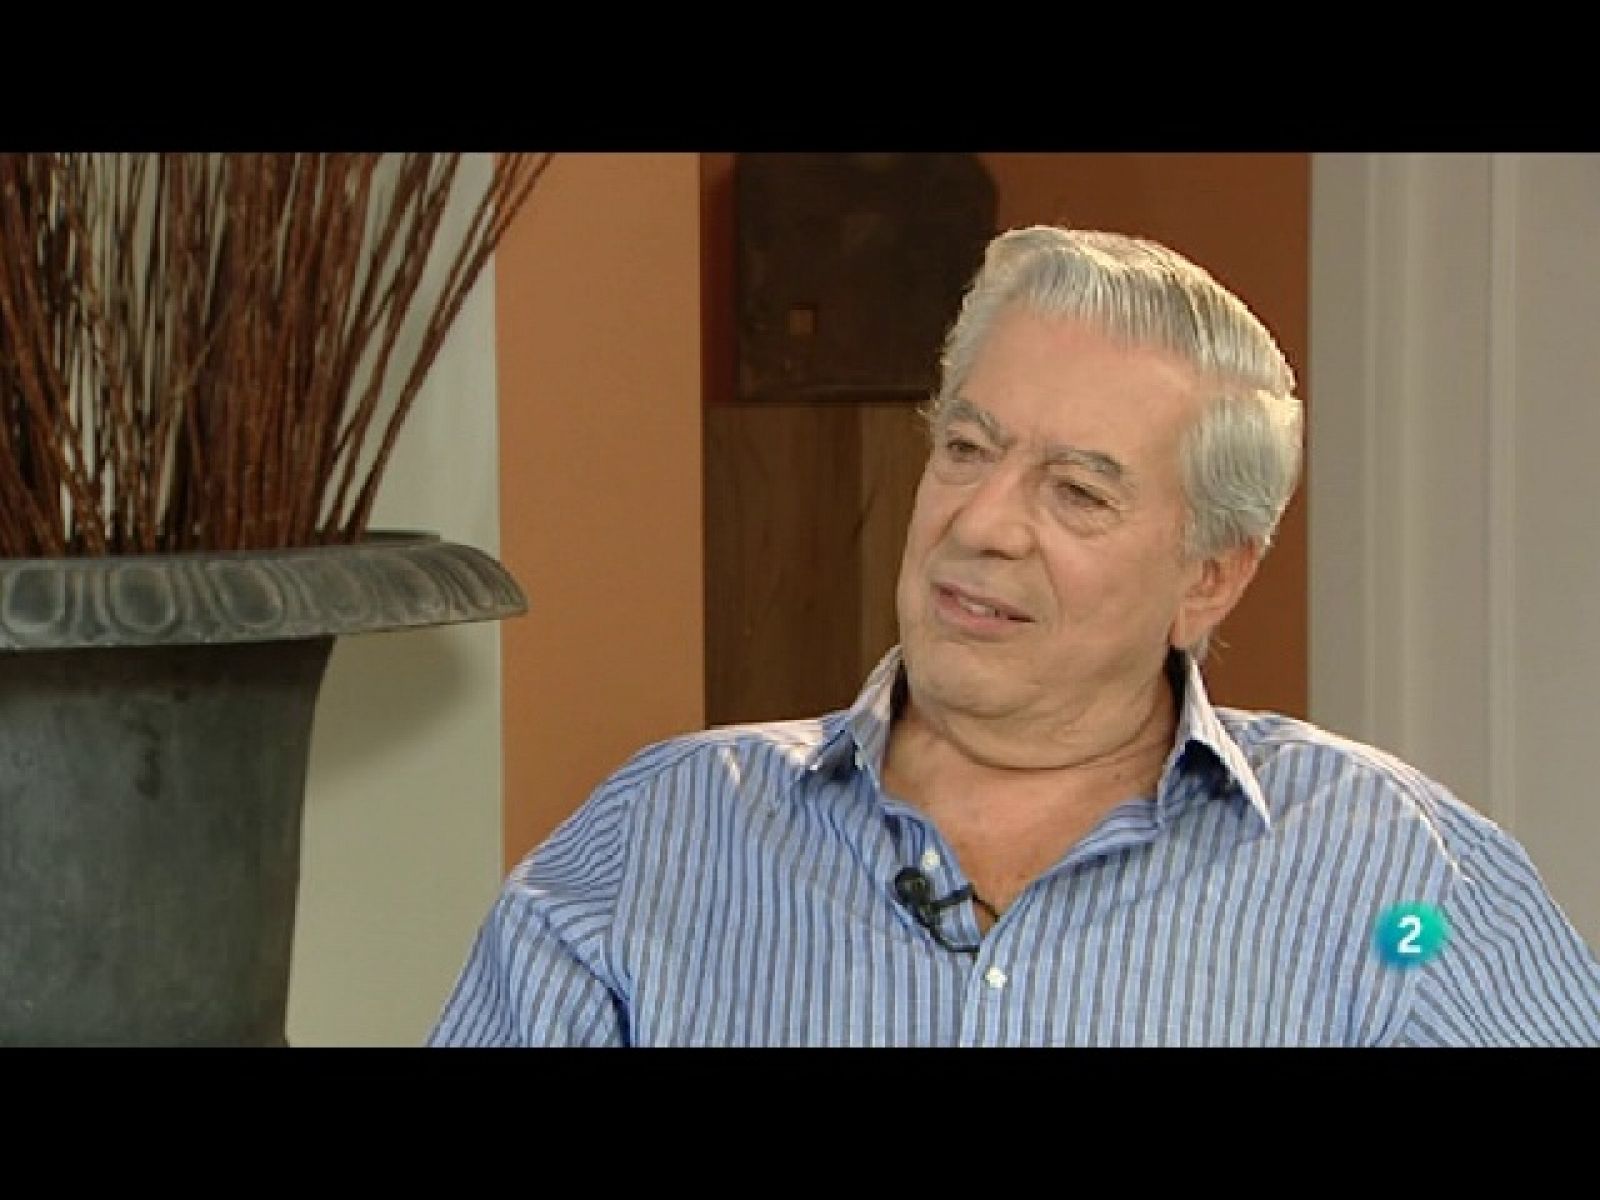 Nostromo (13/10/10): Mario Vargas Llosa